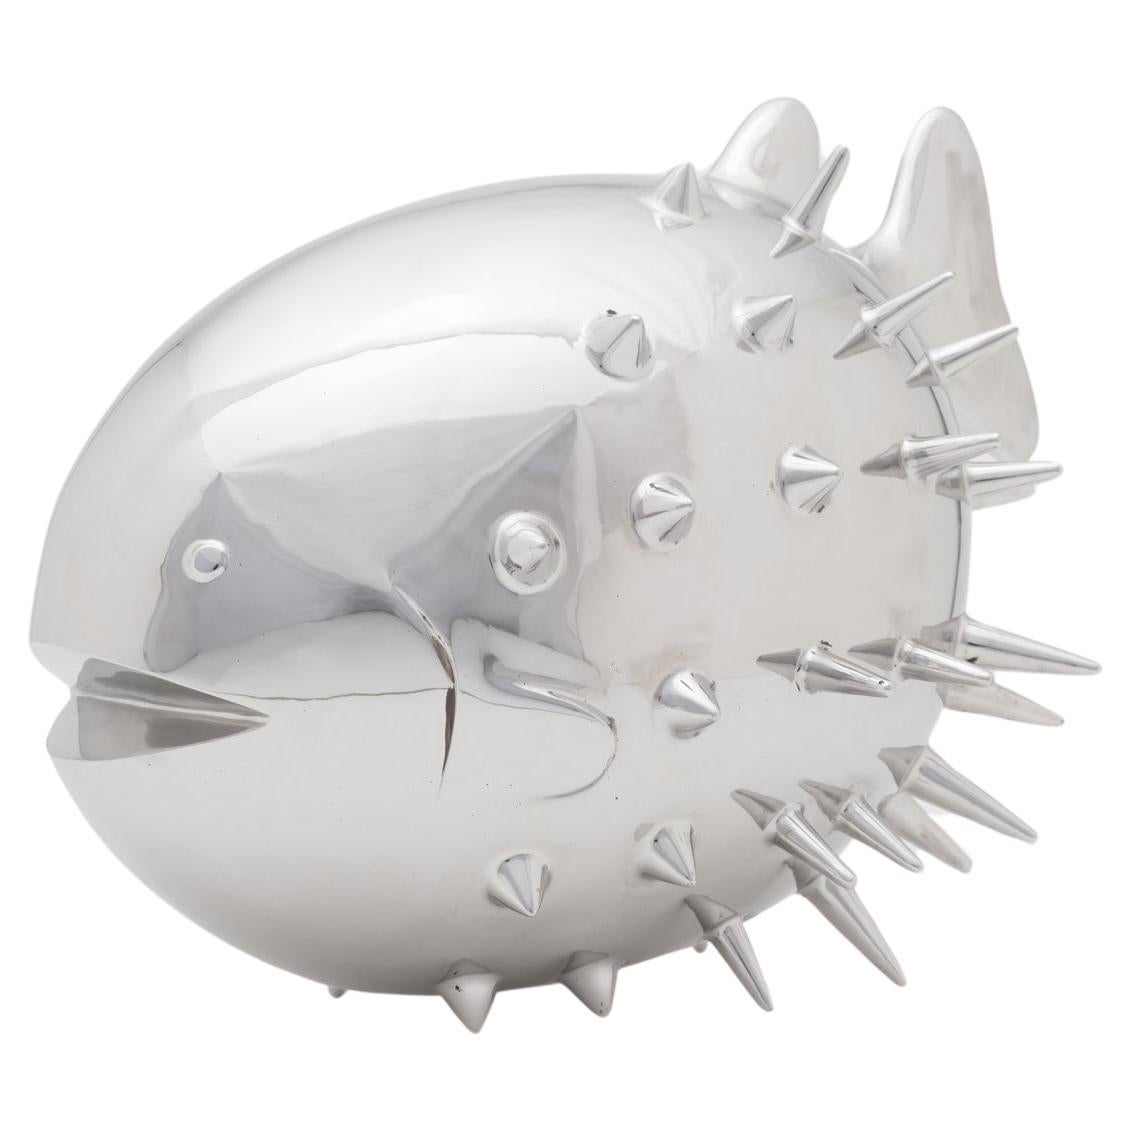 Blowfish sculpture by Mizraim Cárdenas